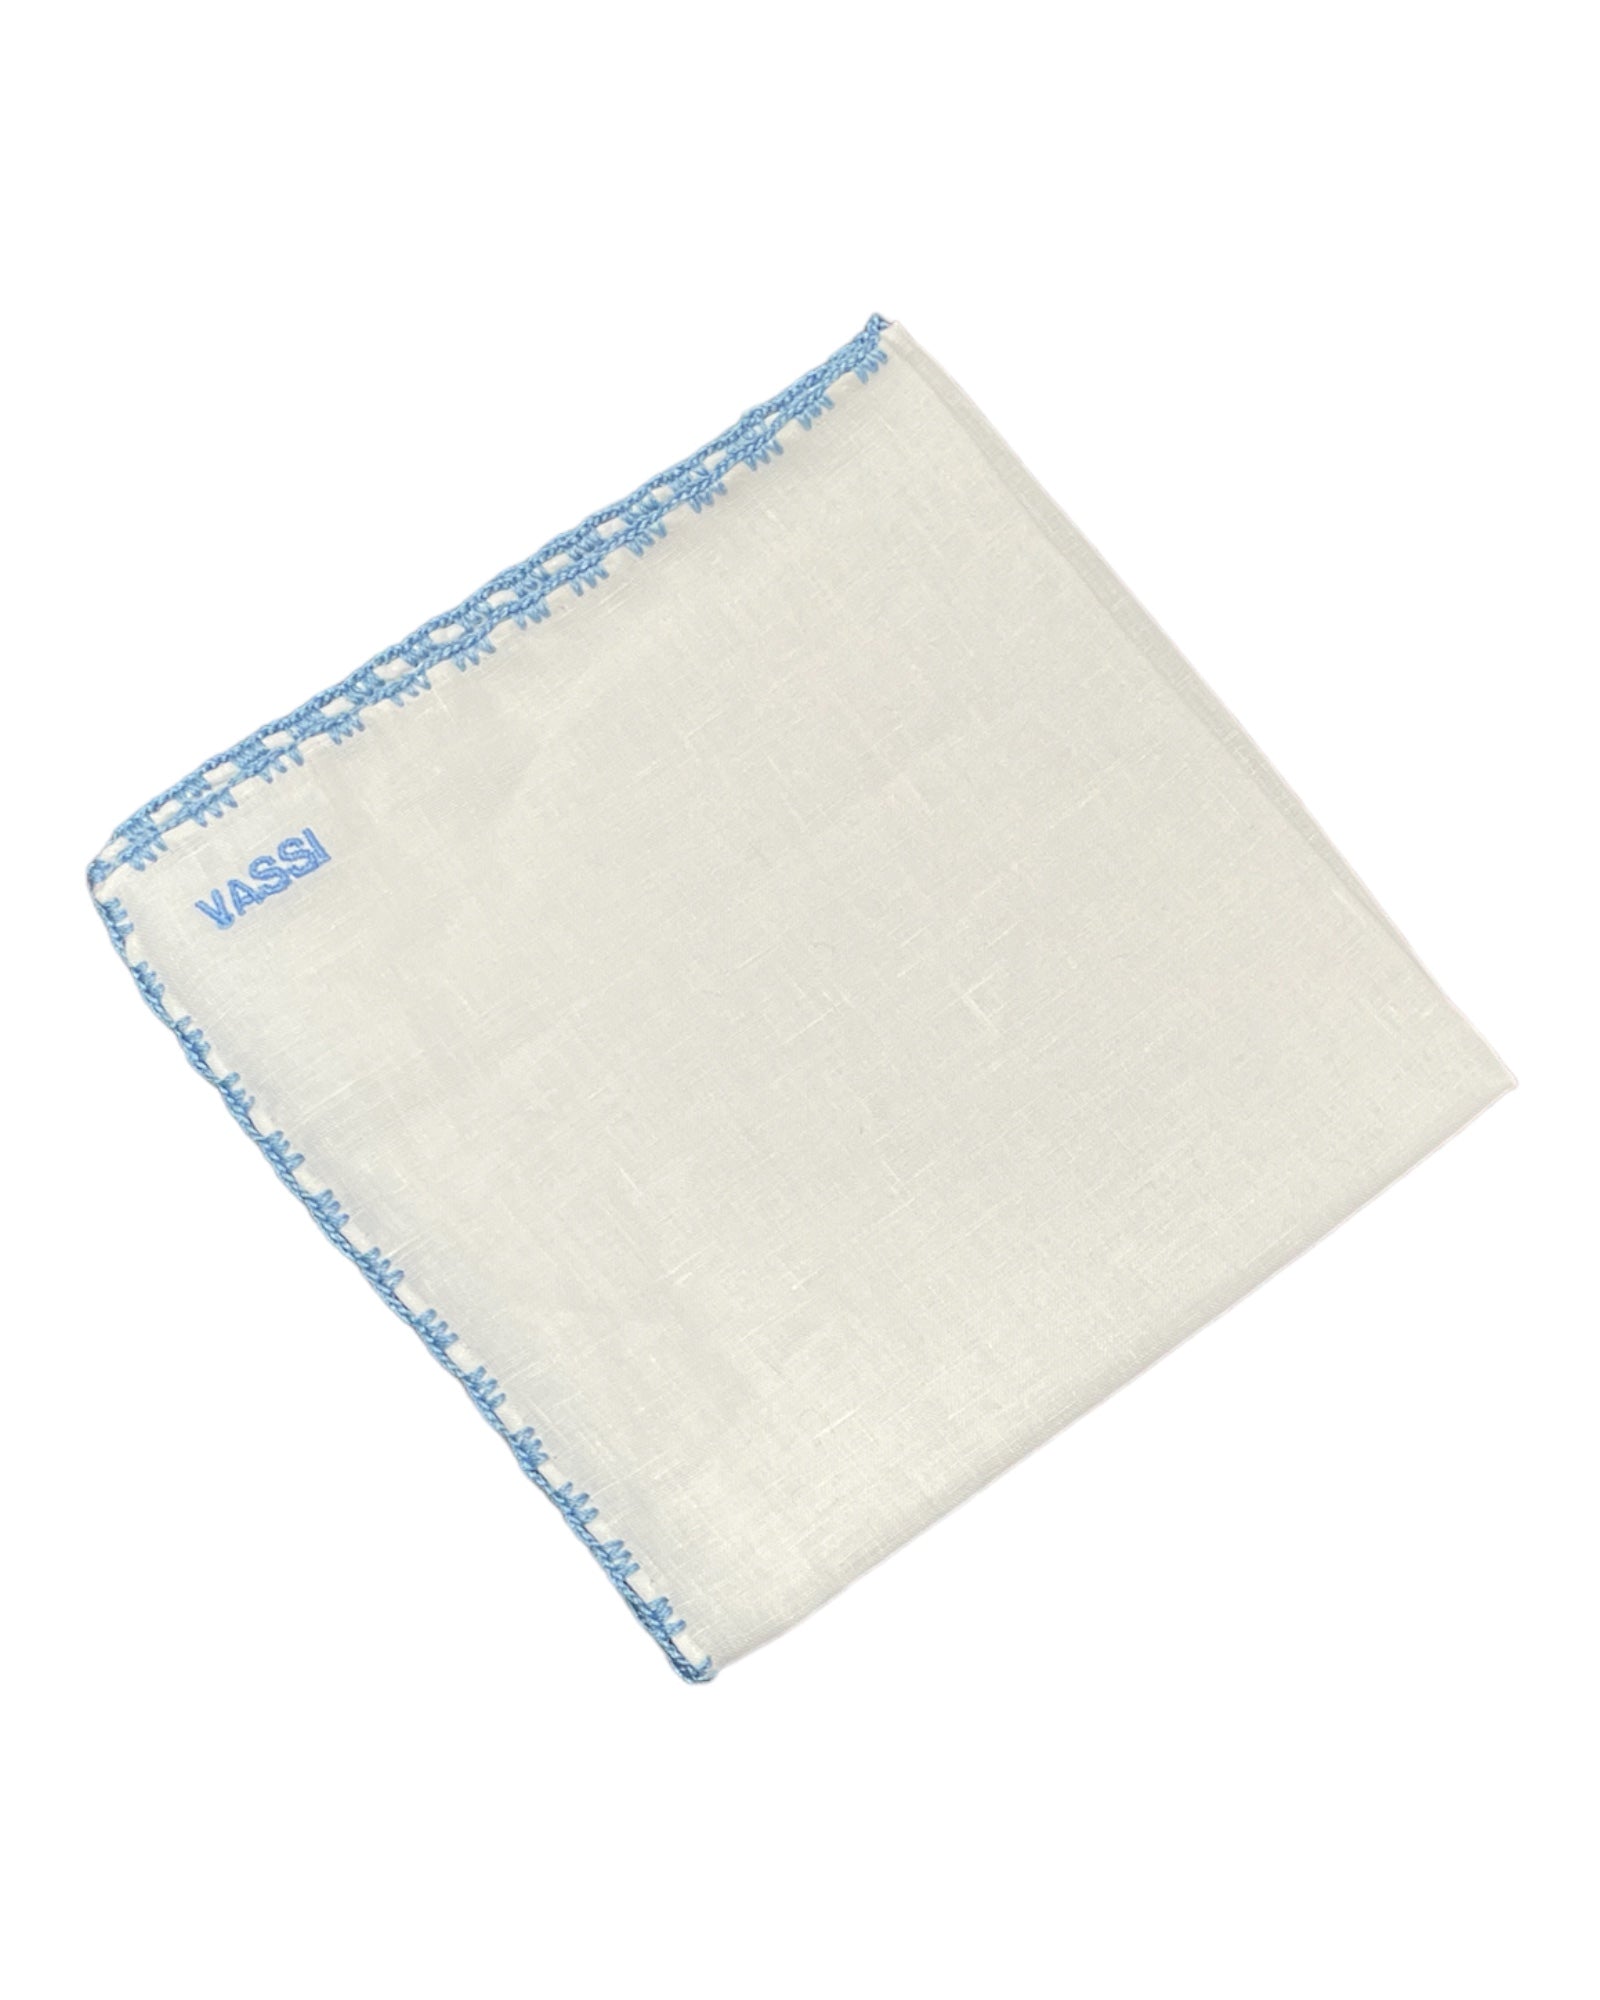 White Linen Pocket Square With Handrolled Triple V- Stitch Pocket SquareLight blue